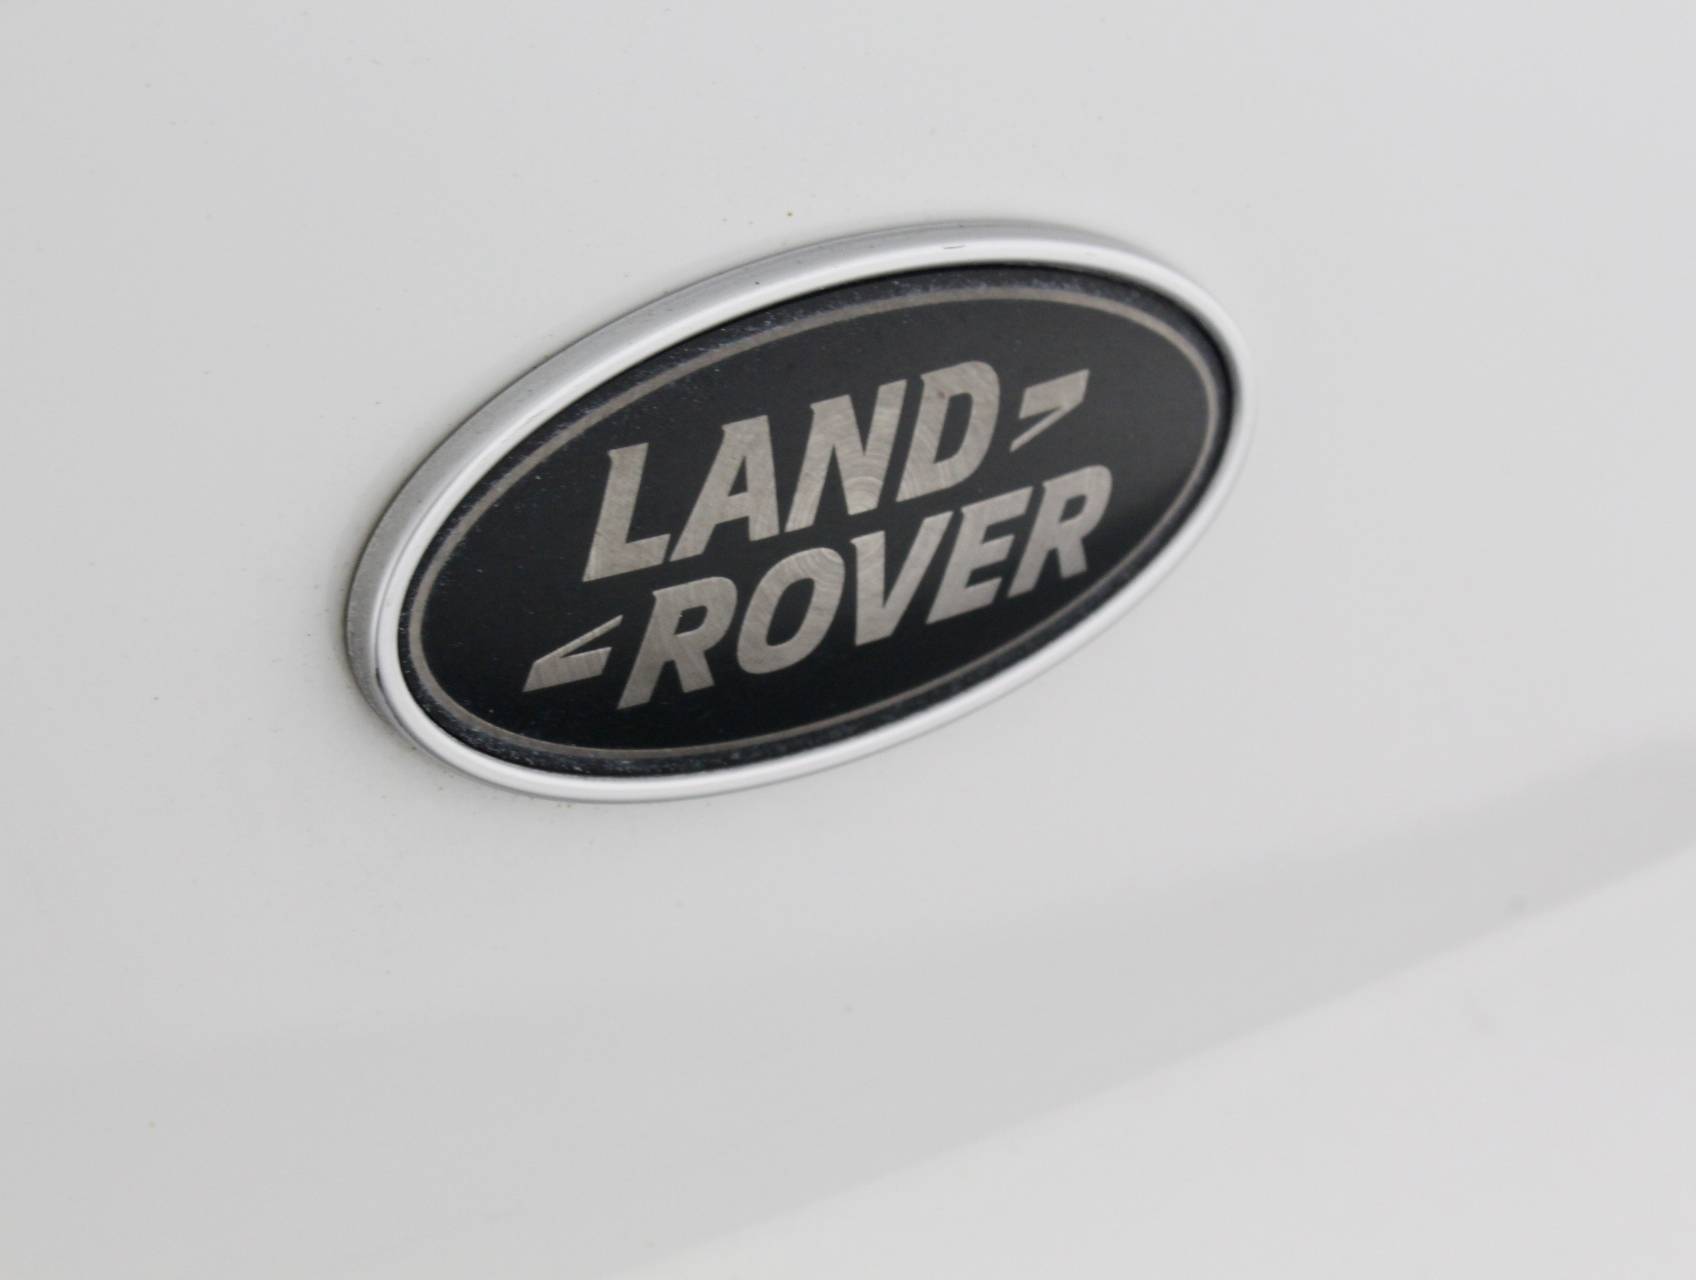 Florida Fine Cars - Used LAND ROVER RANGE ROVER SPORT 2016 MIAMI SE